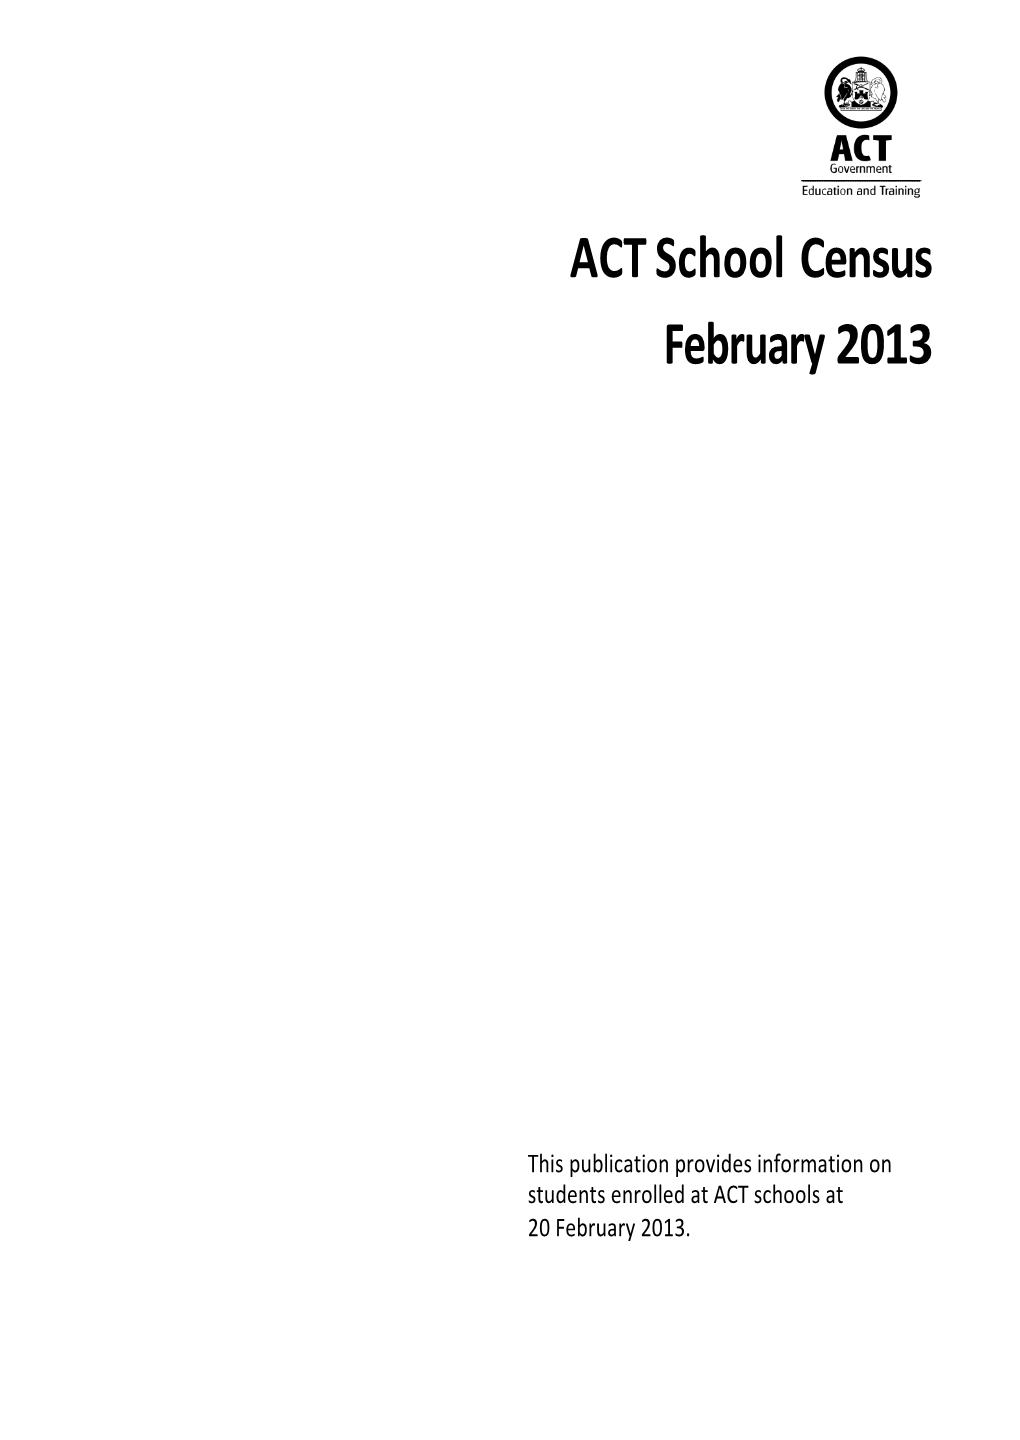 ACT School Census February 2013